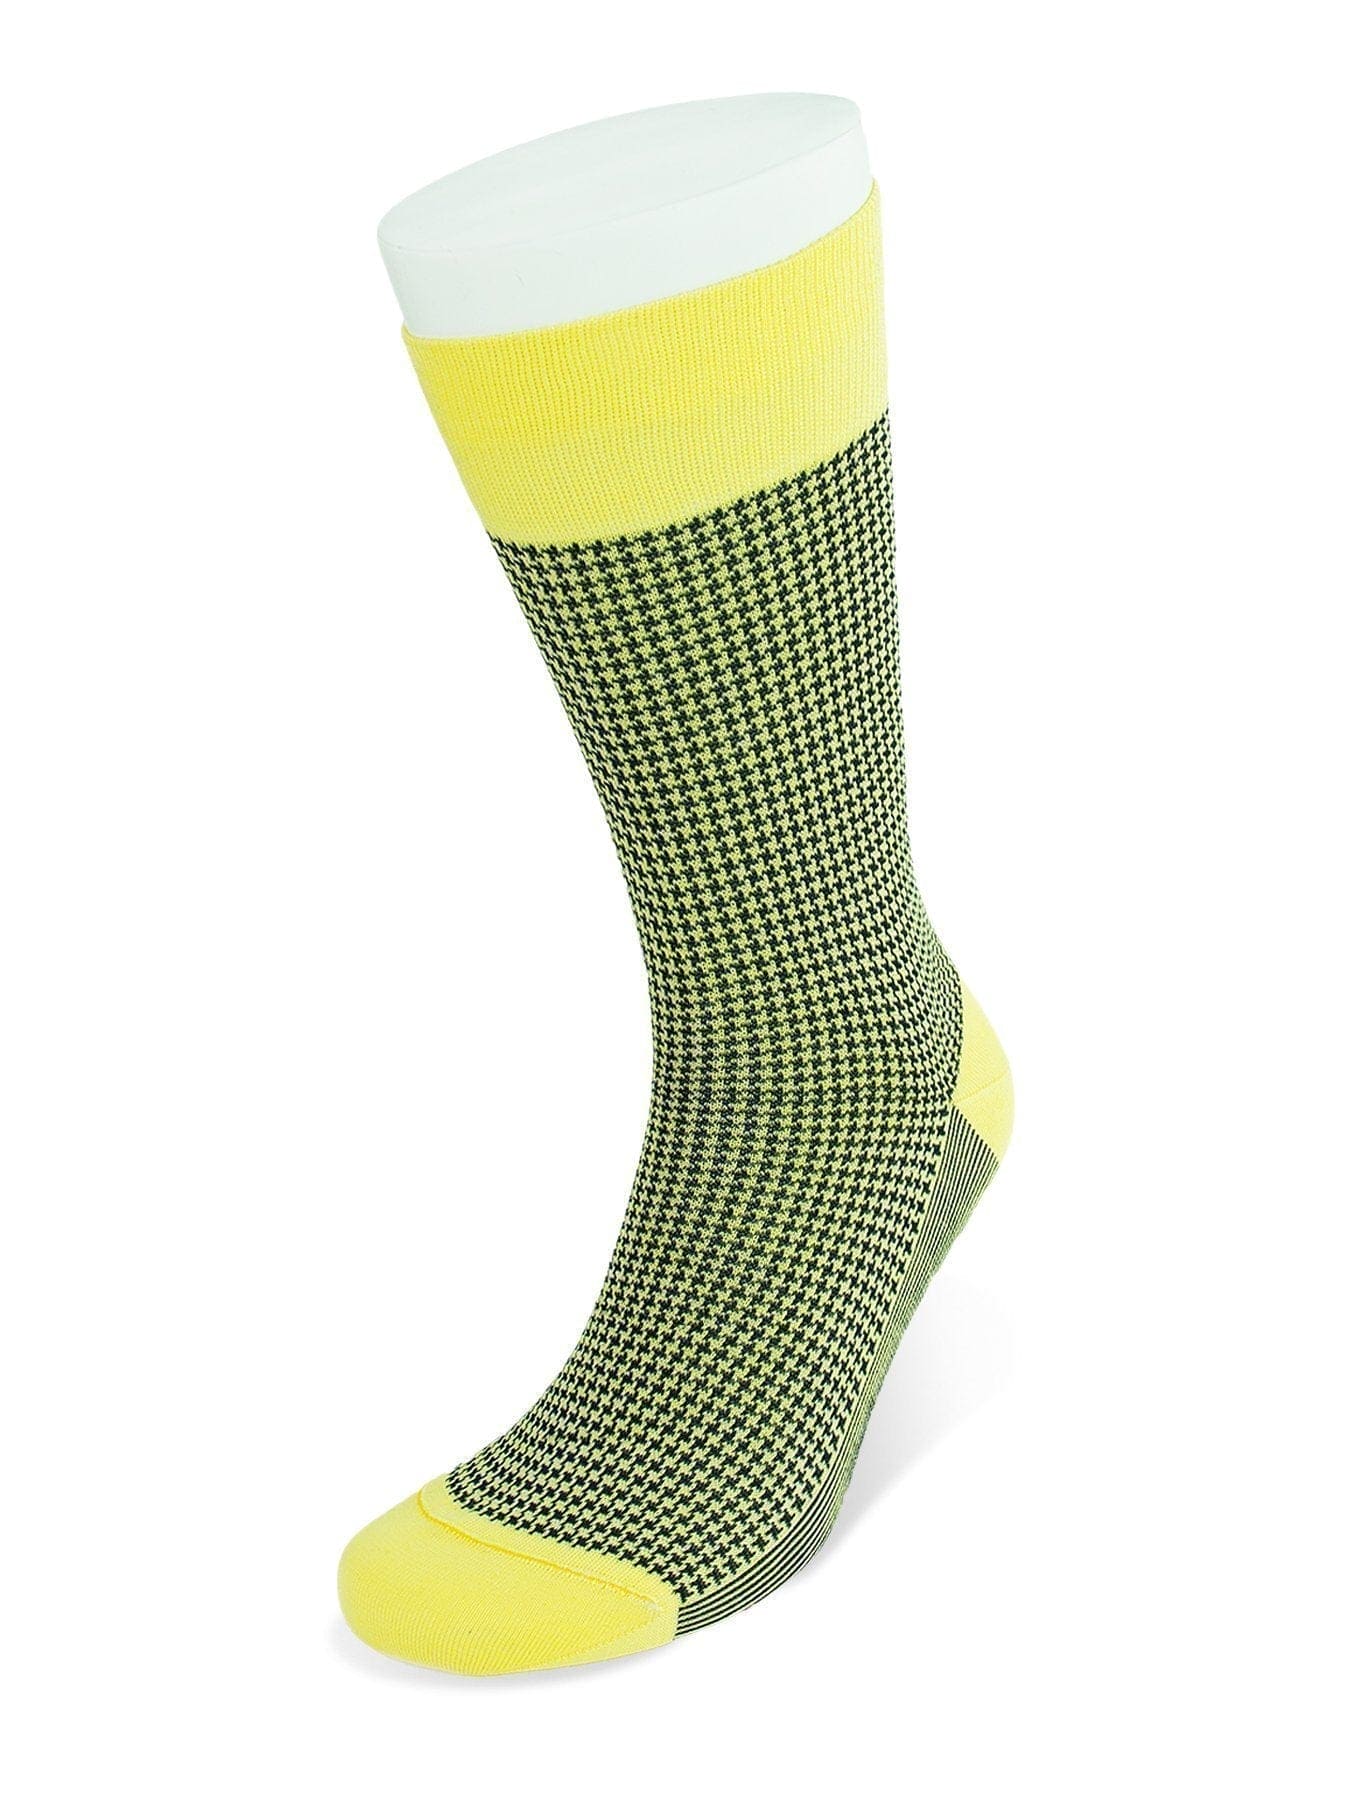 Short Yellow & Navy Houndstooth Cotton Socks